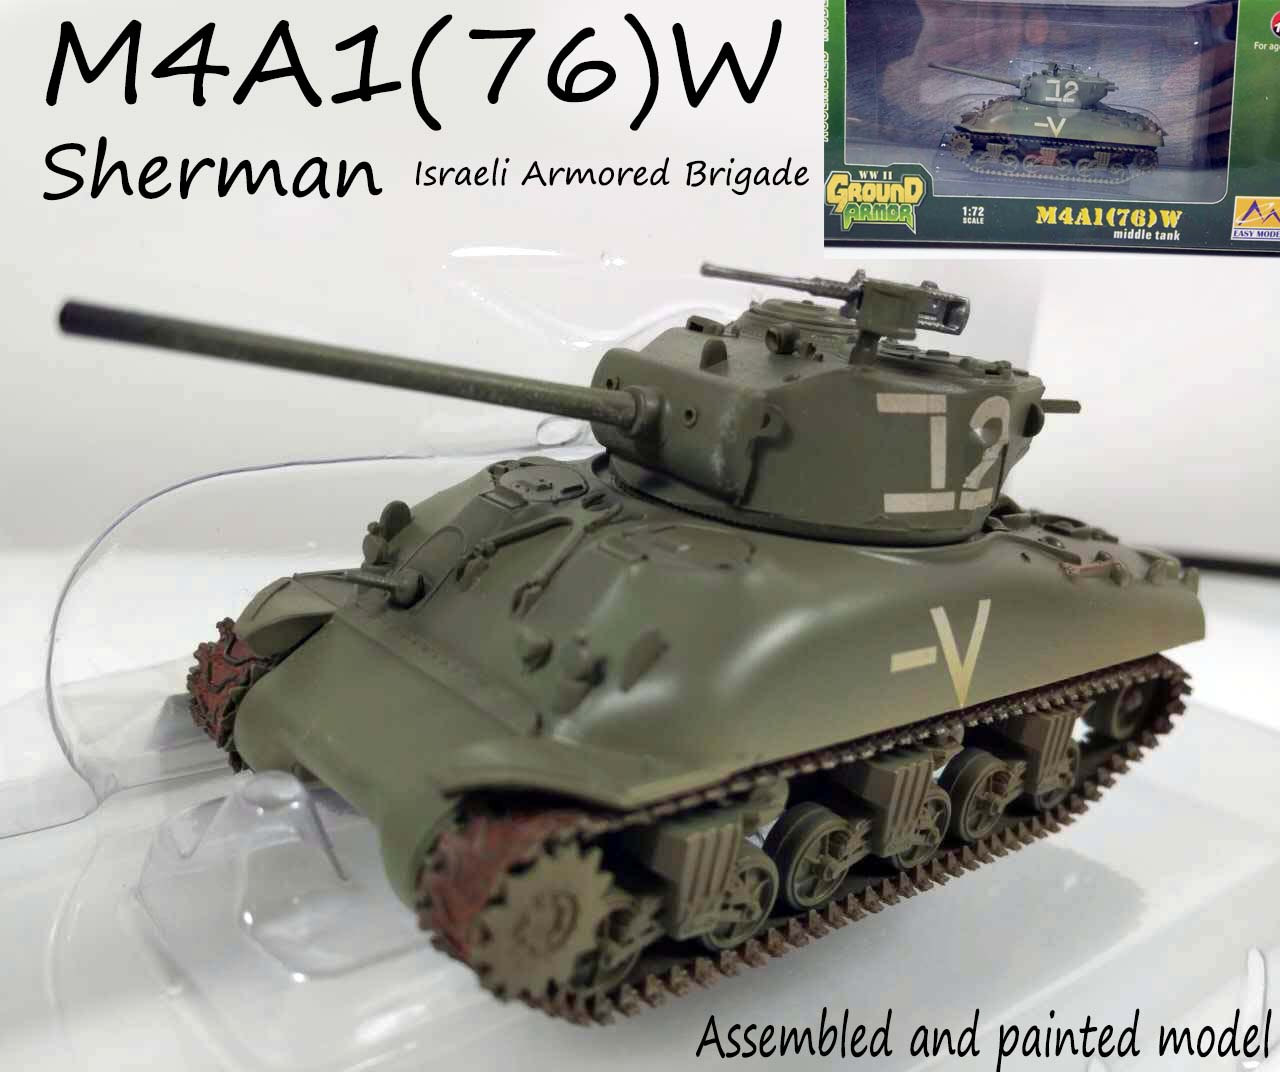 WW2 M4A1(76) W sherman tank Israel 